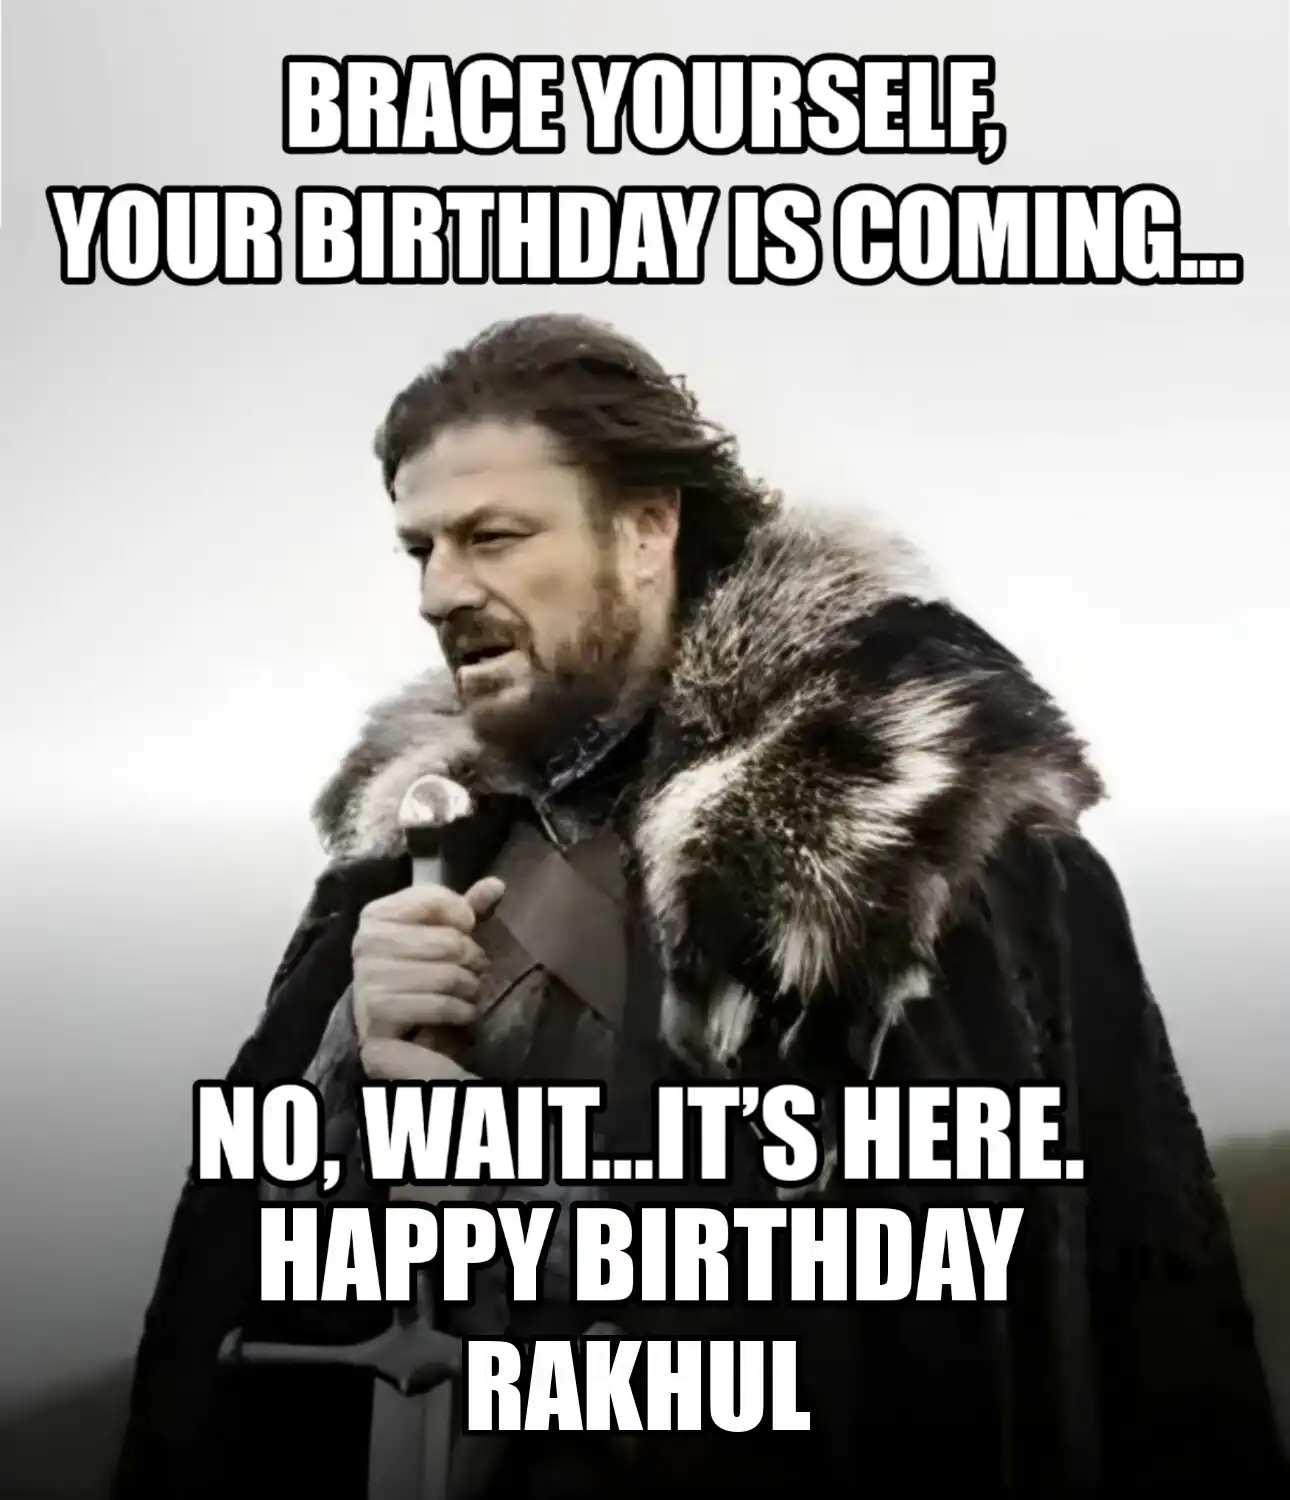 Happy Birthday Rakhul Brace Yourself Your Birthday Is Coming Meme